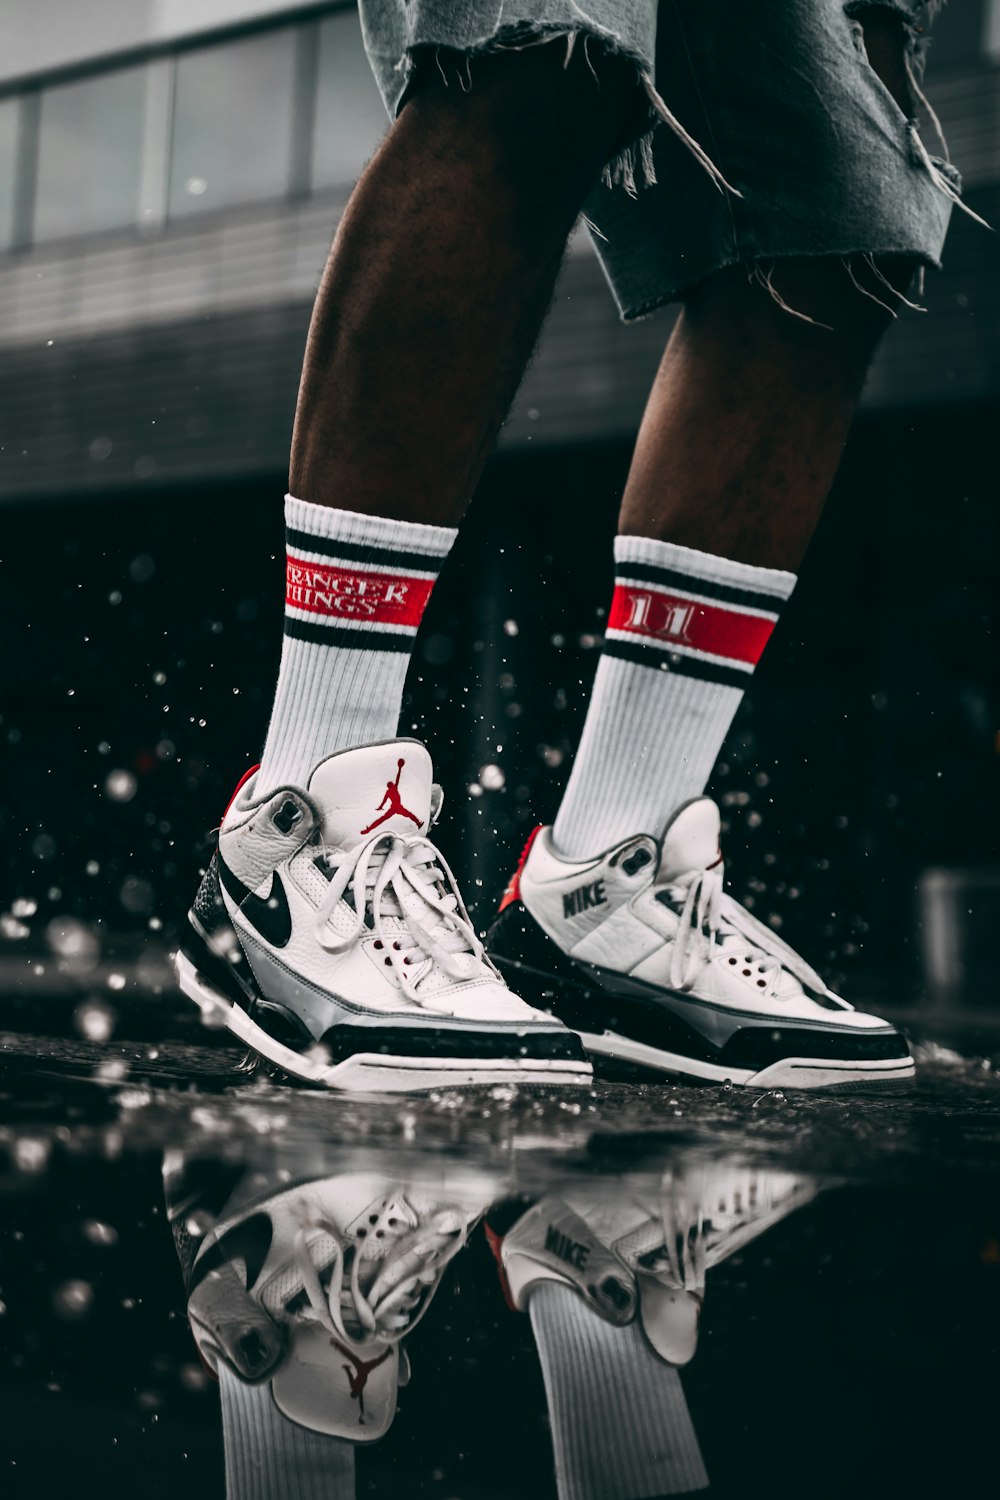 white-red-and-black Air Jordan 1's photo – Free Usa Image on Unsplash